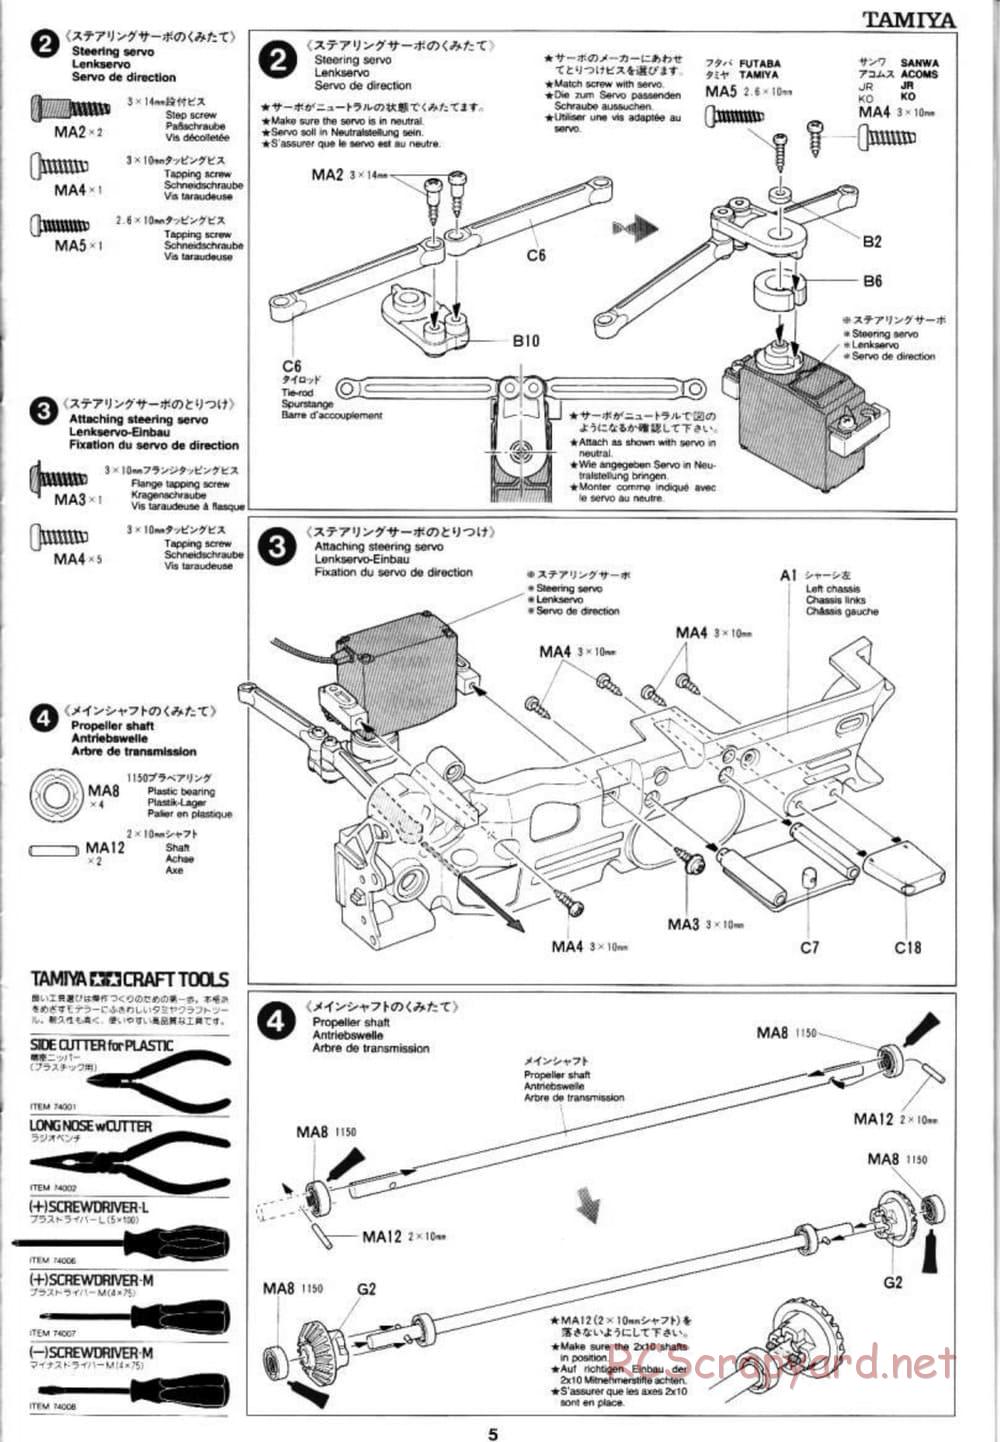 Tamiya - Peugeot 406 ST - TL-01 Chassis - Manual - Page 5